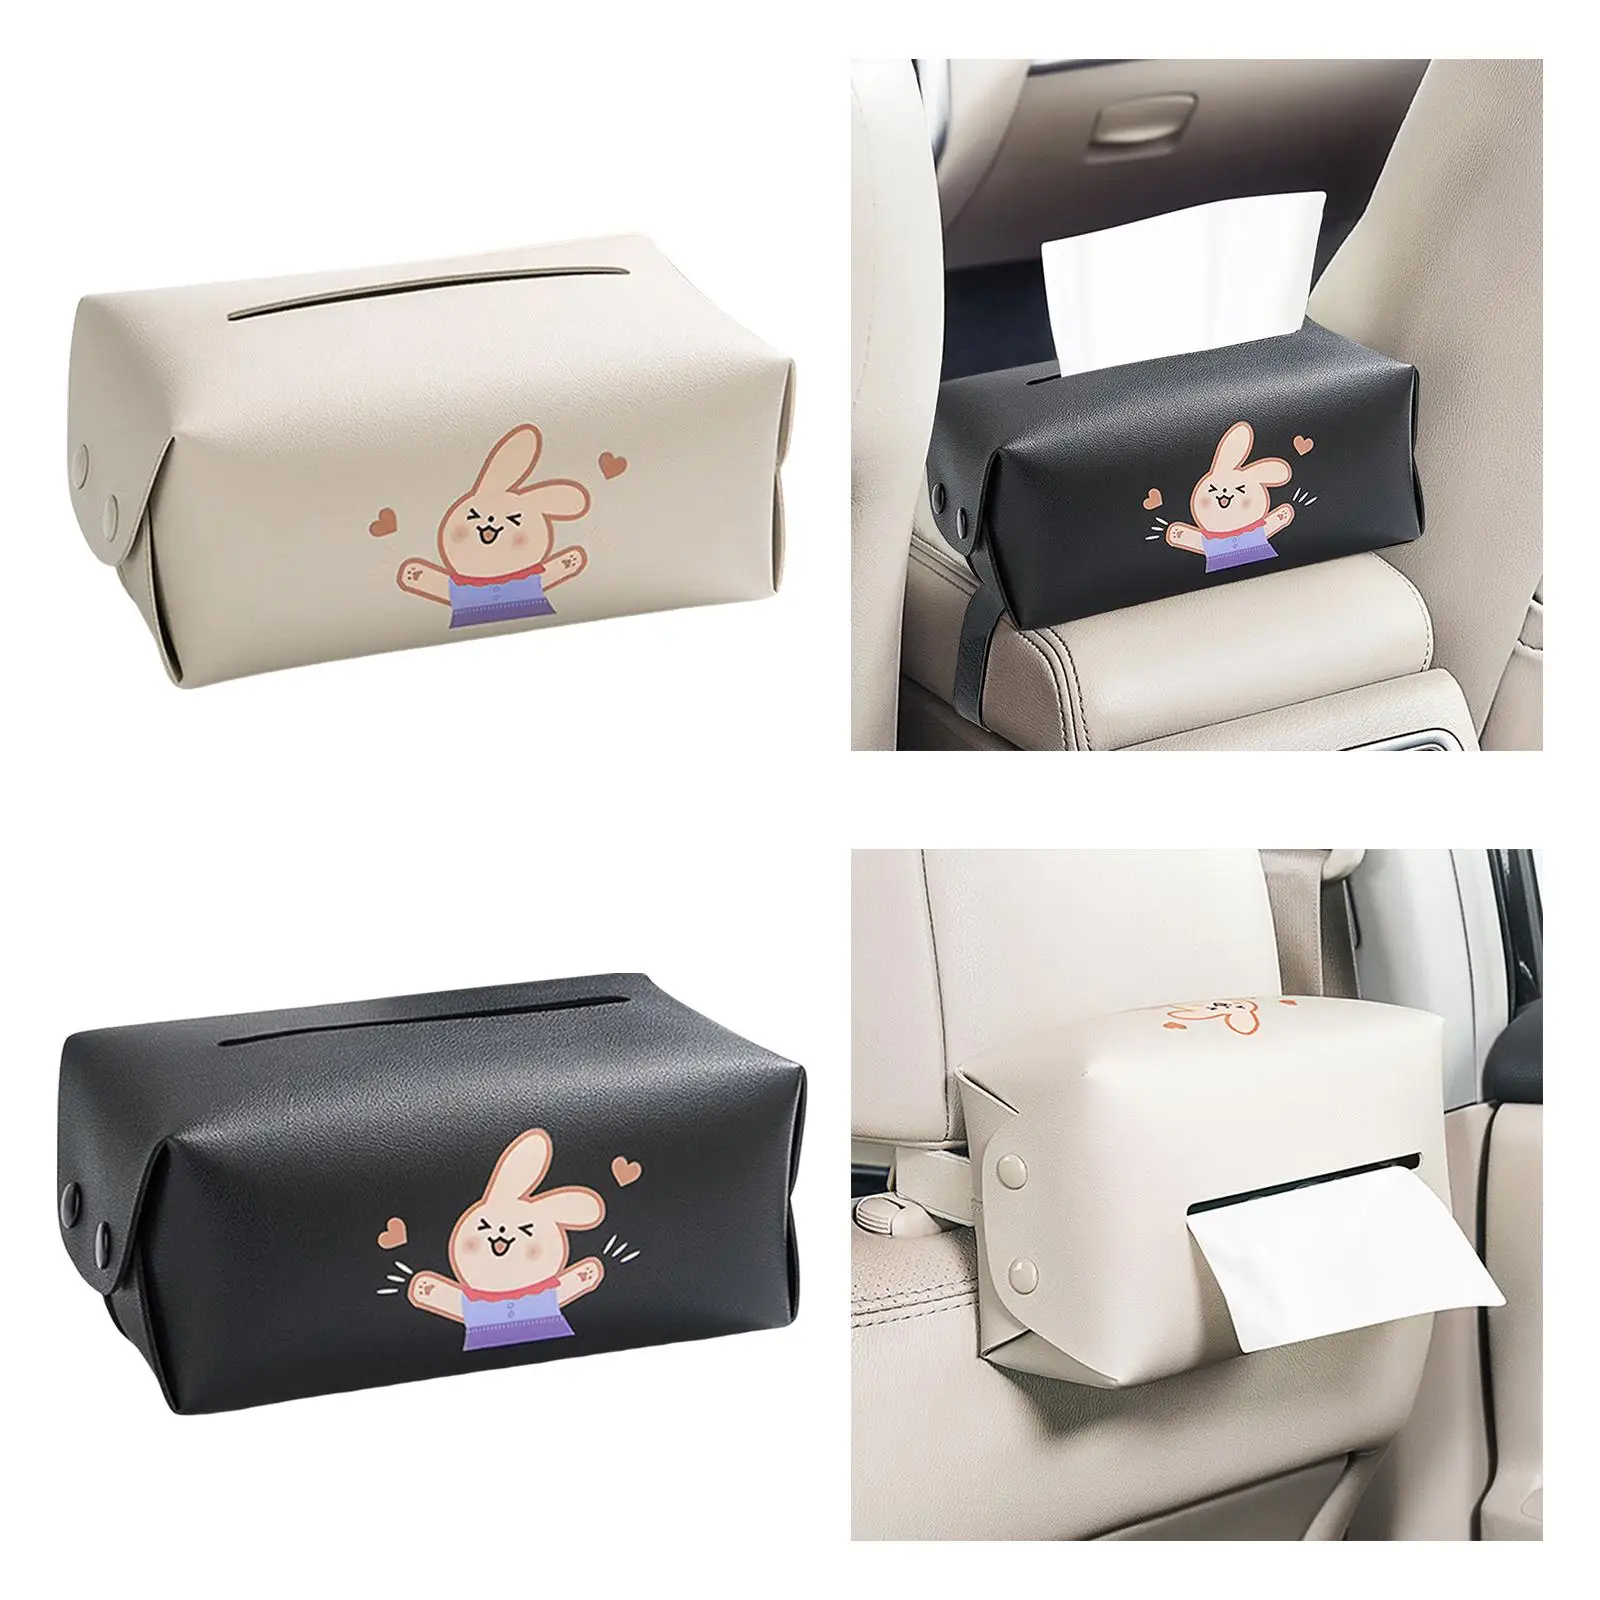 Car Tissue Holder Car Mounted with Spring Bracket Car Auto Supplies Auto Napkin Dispenser for Car Armrest Box Backseat